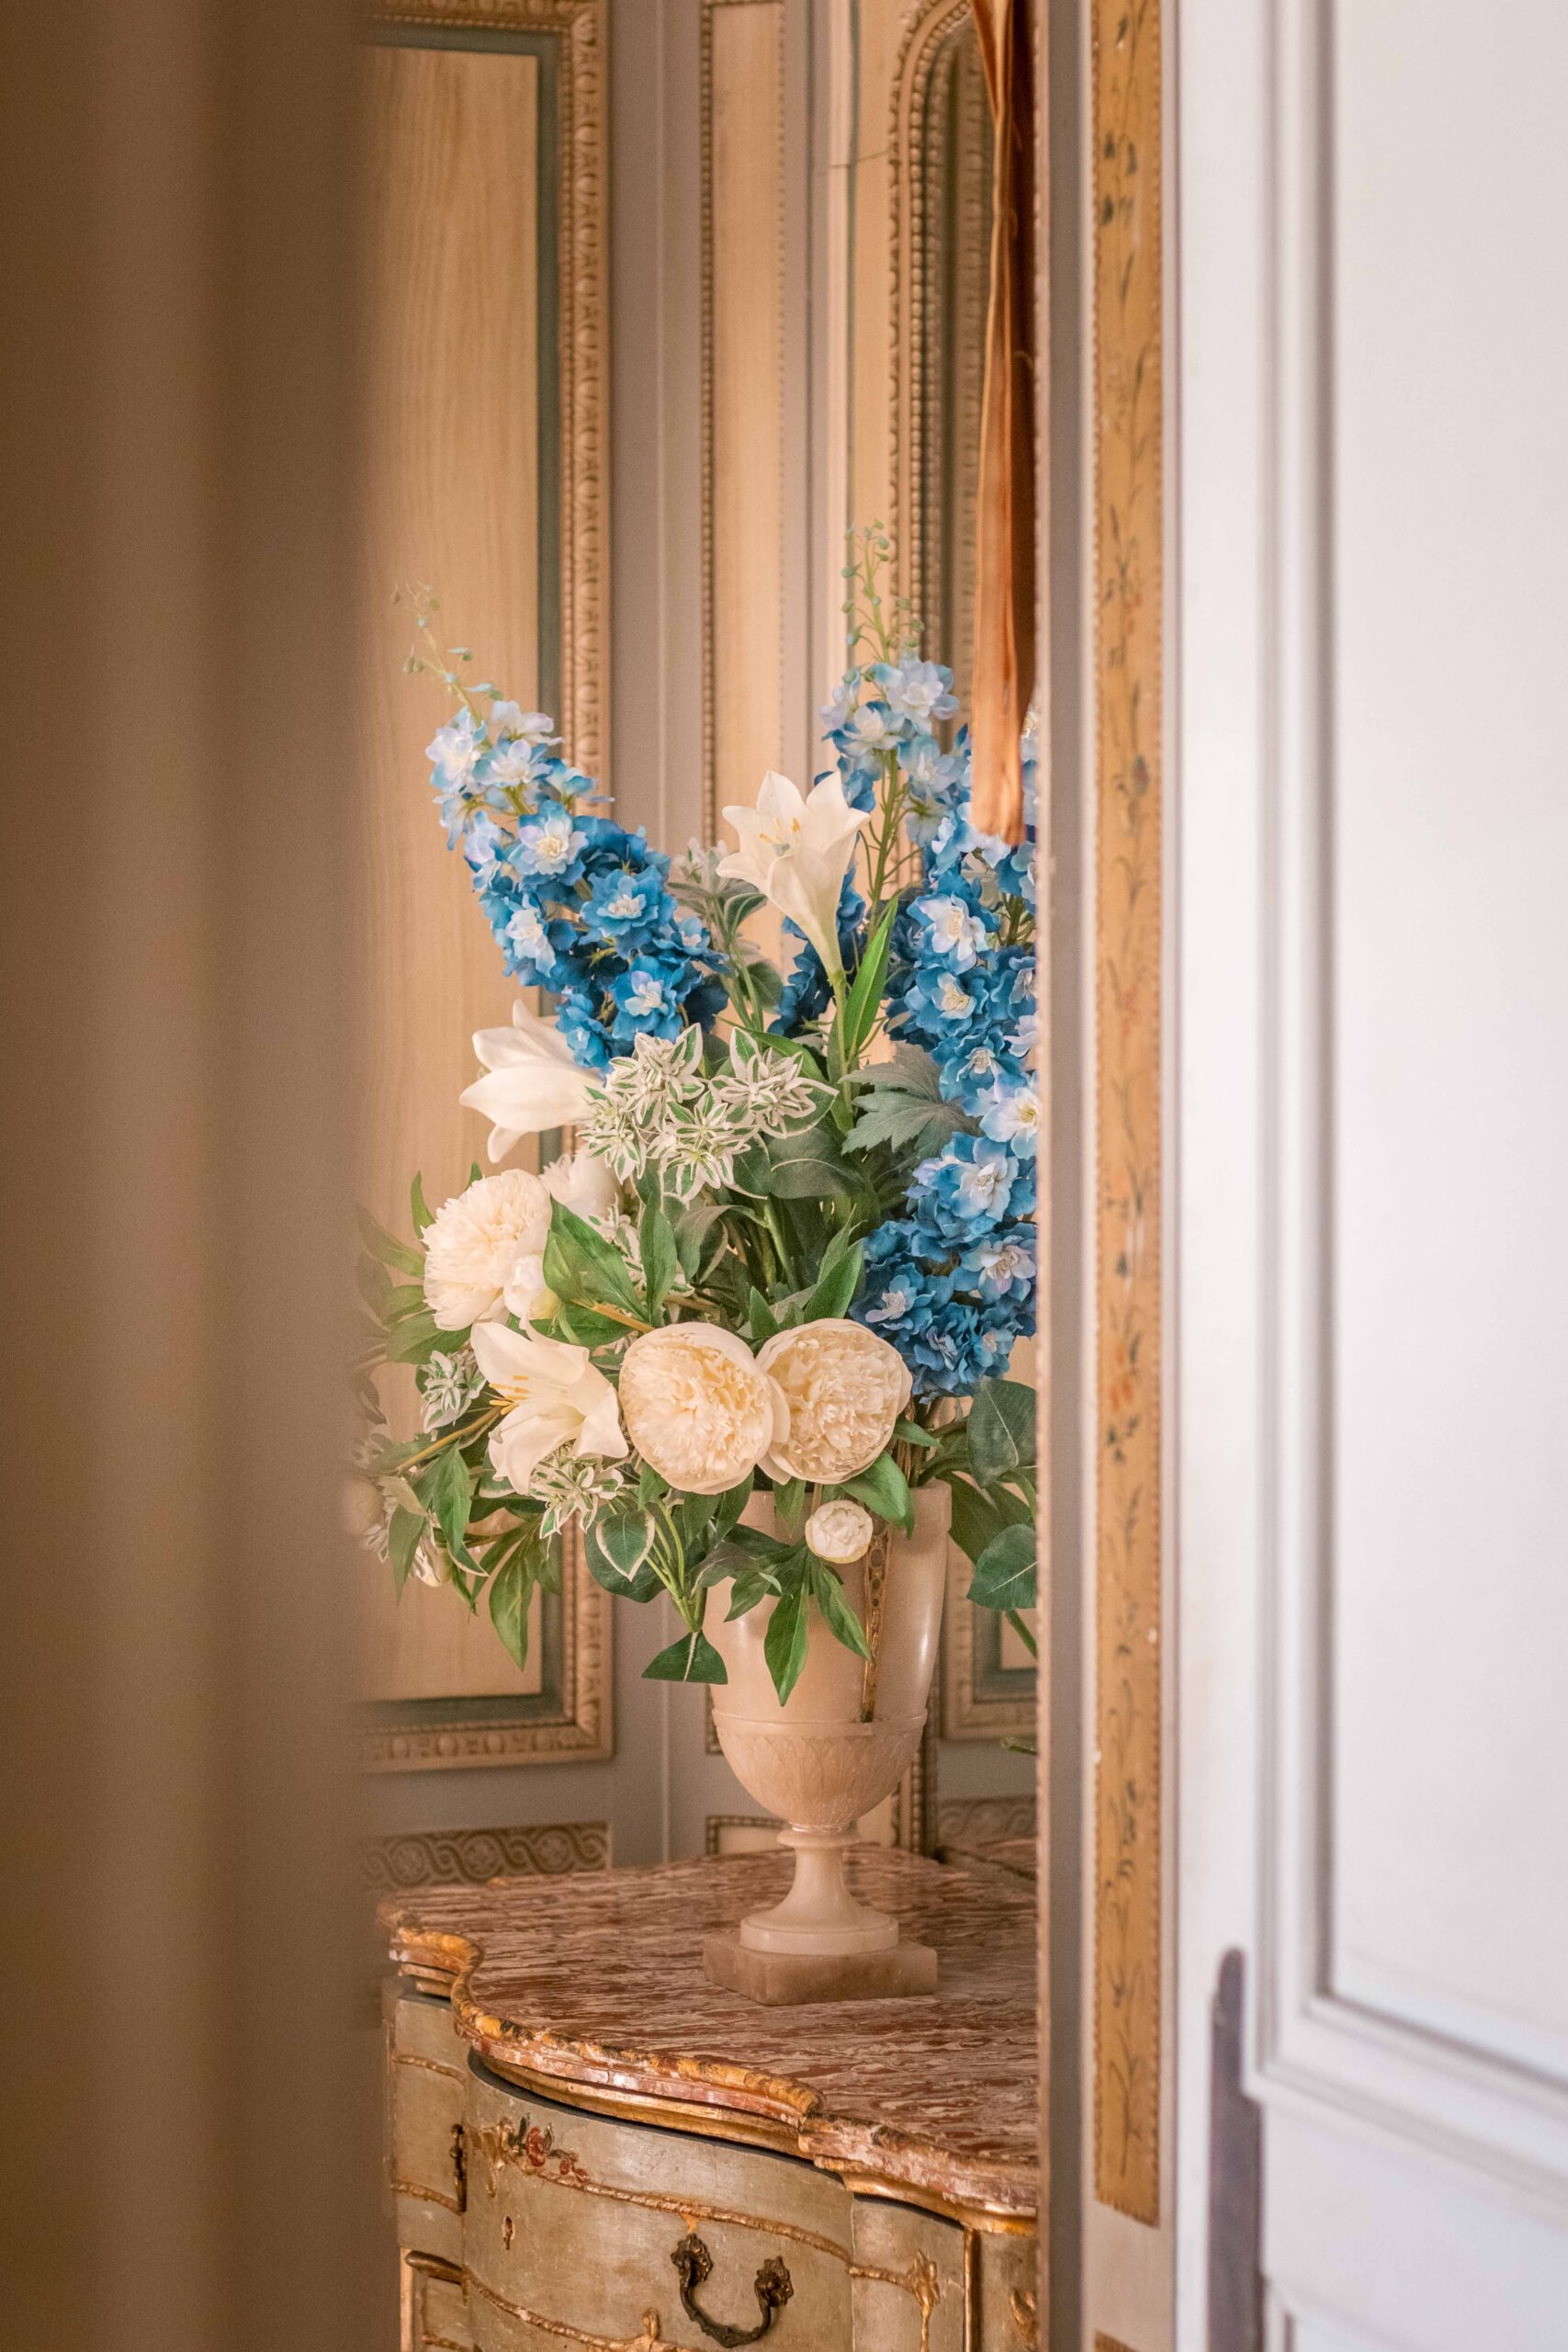 Details of a white and blue flowers bouquet indoor the Villa Ephrussi de Rothschild in Saint-Jean-Cap-Ferrat, France